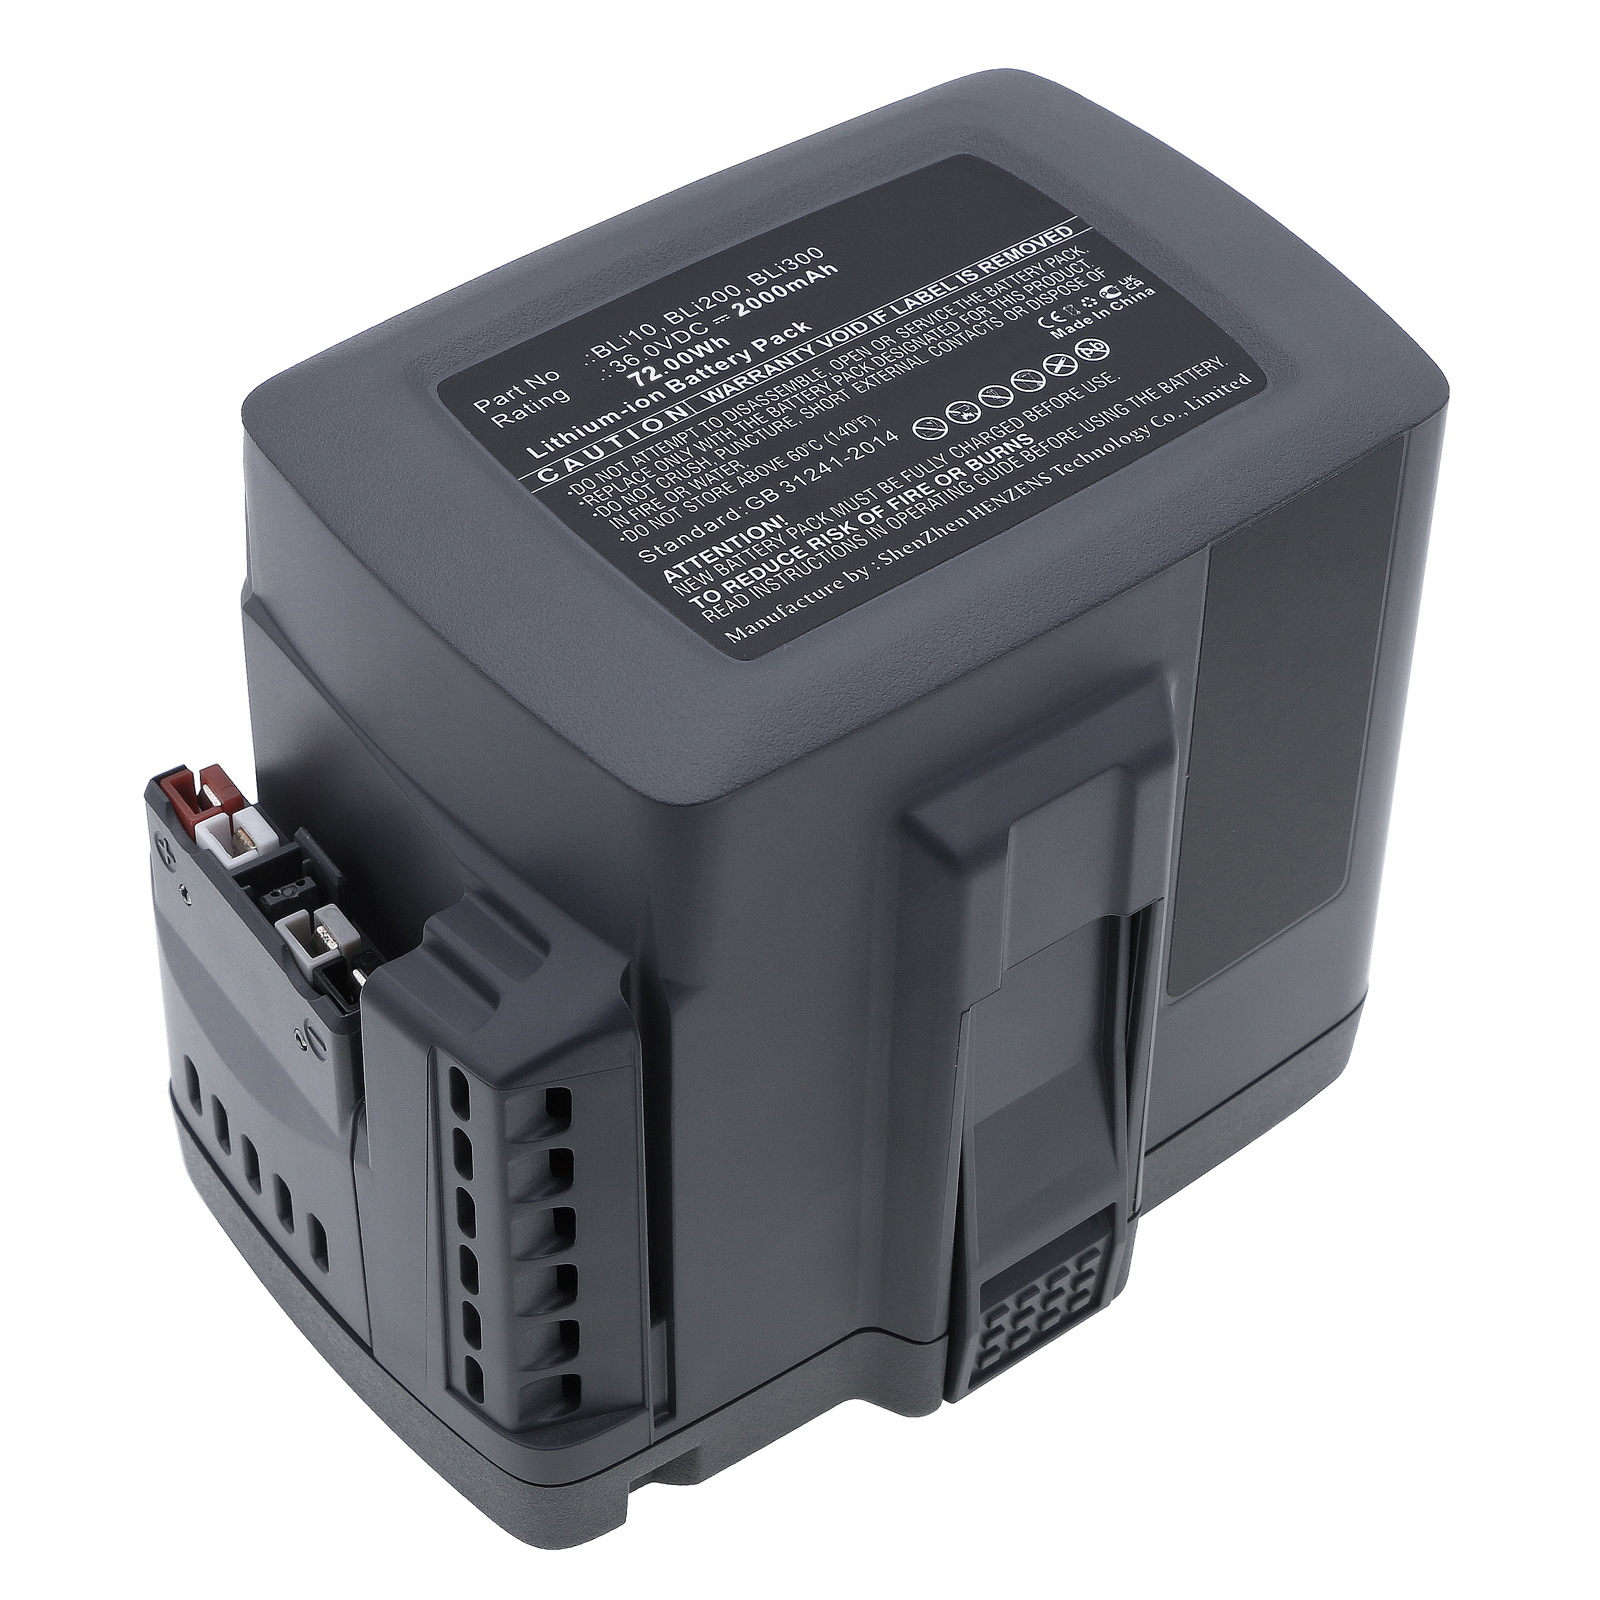 Synergy Digital Lawn Mower Battery, Compatible with Husqvarna BLi10 Lawn Mower Battery (Li-ion, 36V, 2000mAh)